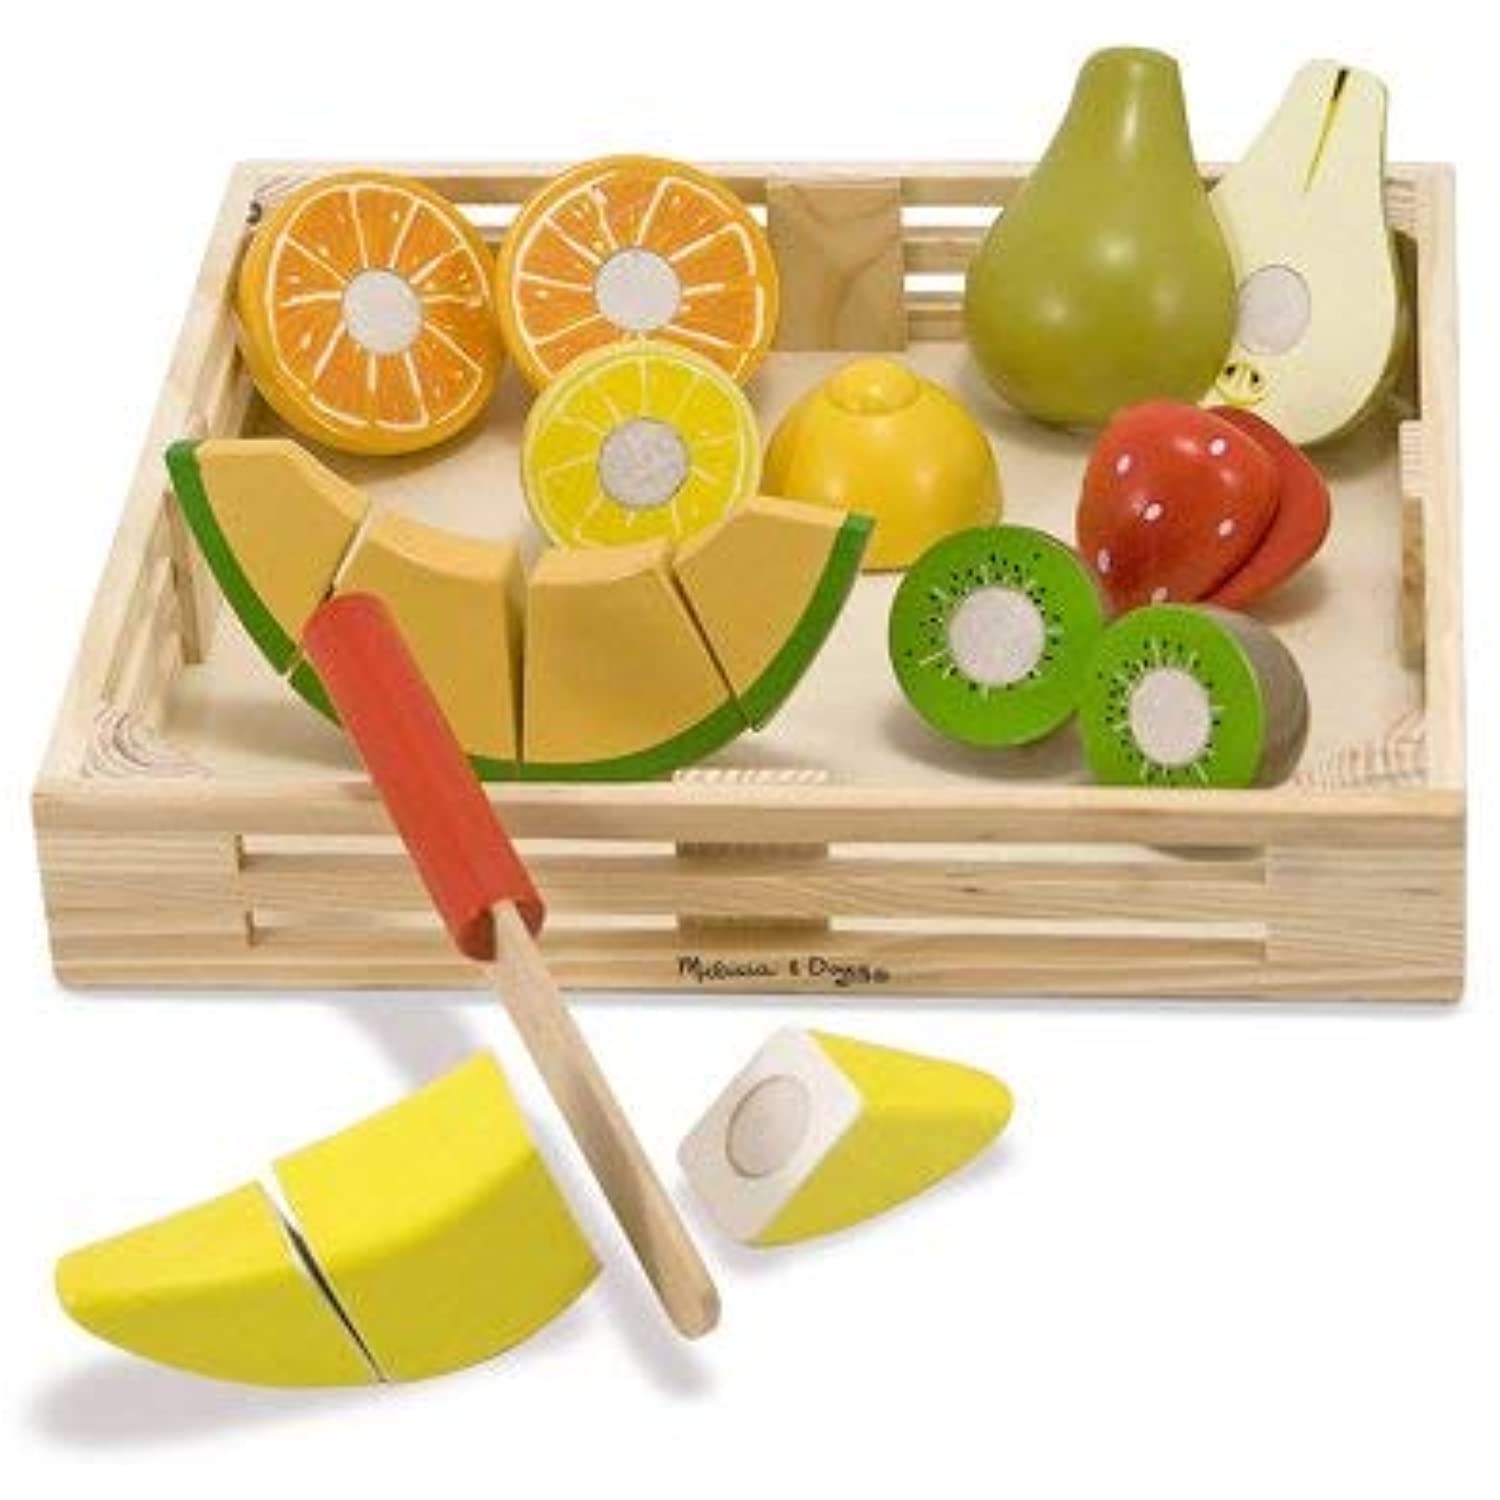 Cutting Fruit Set (18pcs): Wooden Play Food Set & 1 Melissa & Doug Scratch Art Mini-Pad Bundle (40211)